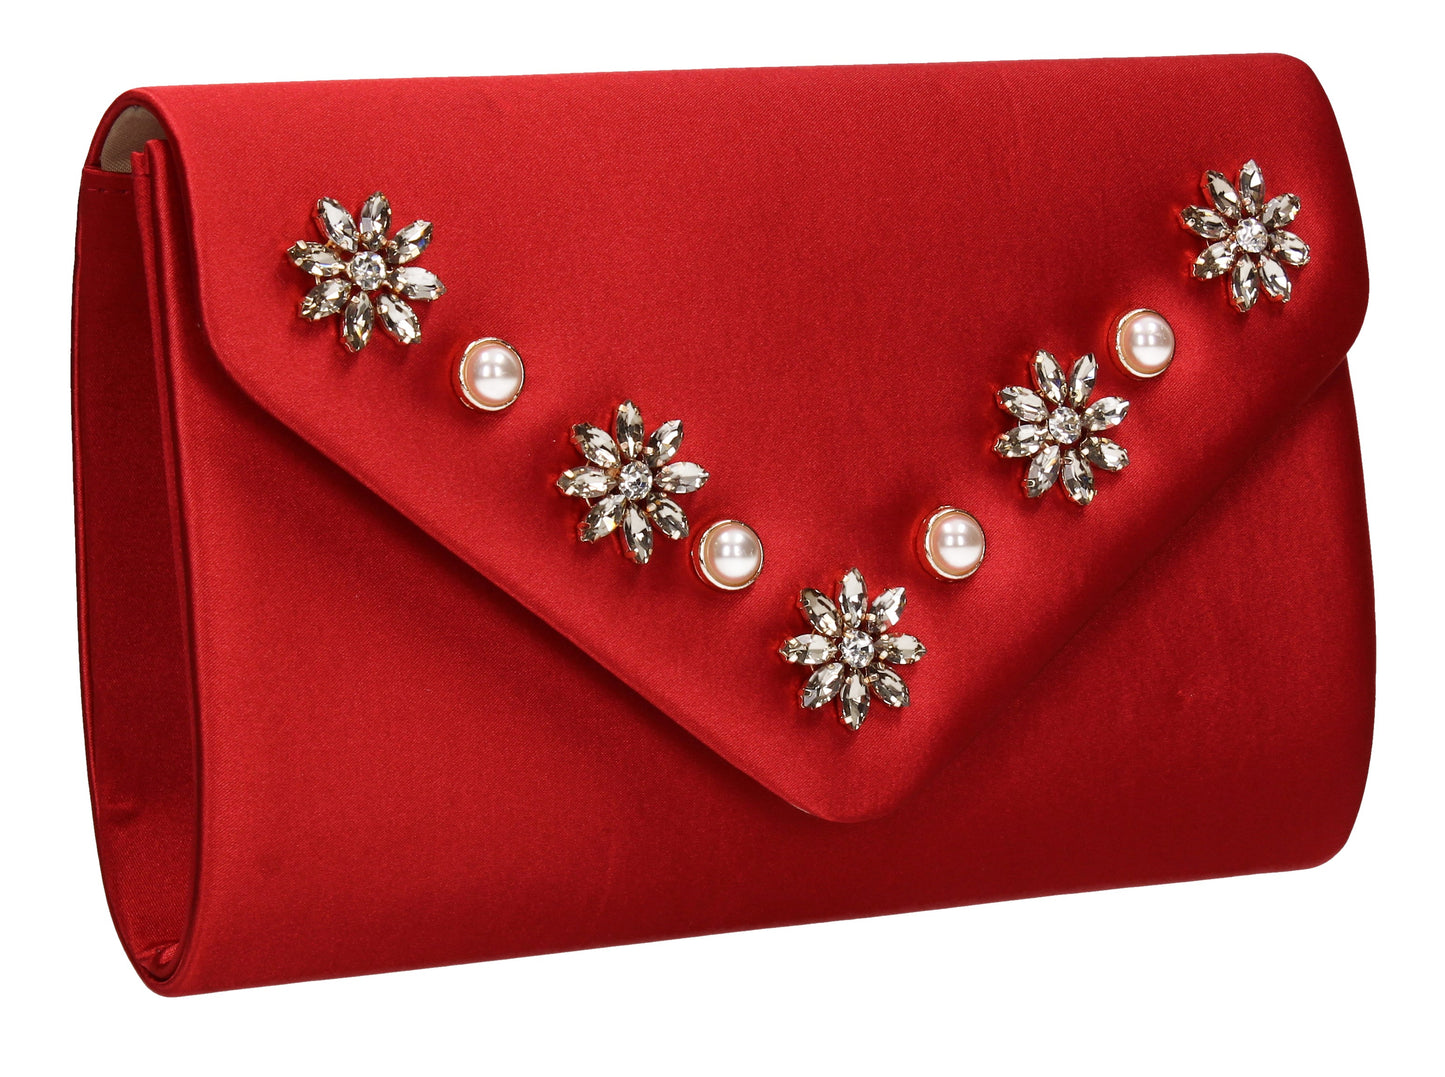 SWANKYSWANS Leila Clutch Bag Red Cute Cheap Clutch Bag For Weddings School and Work